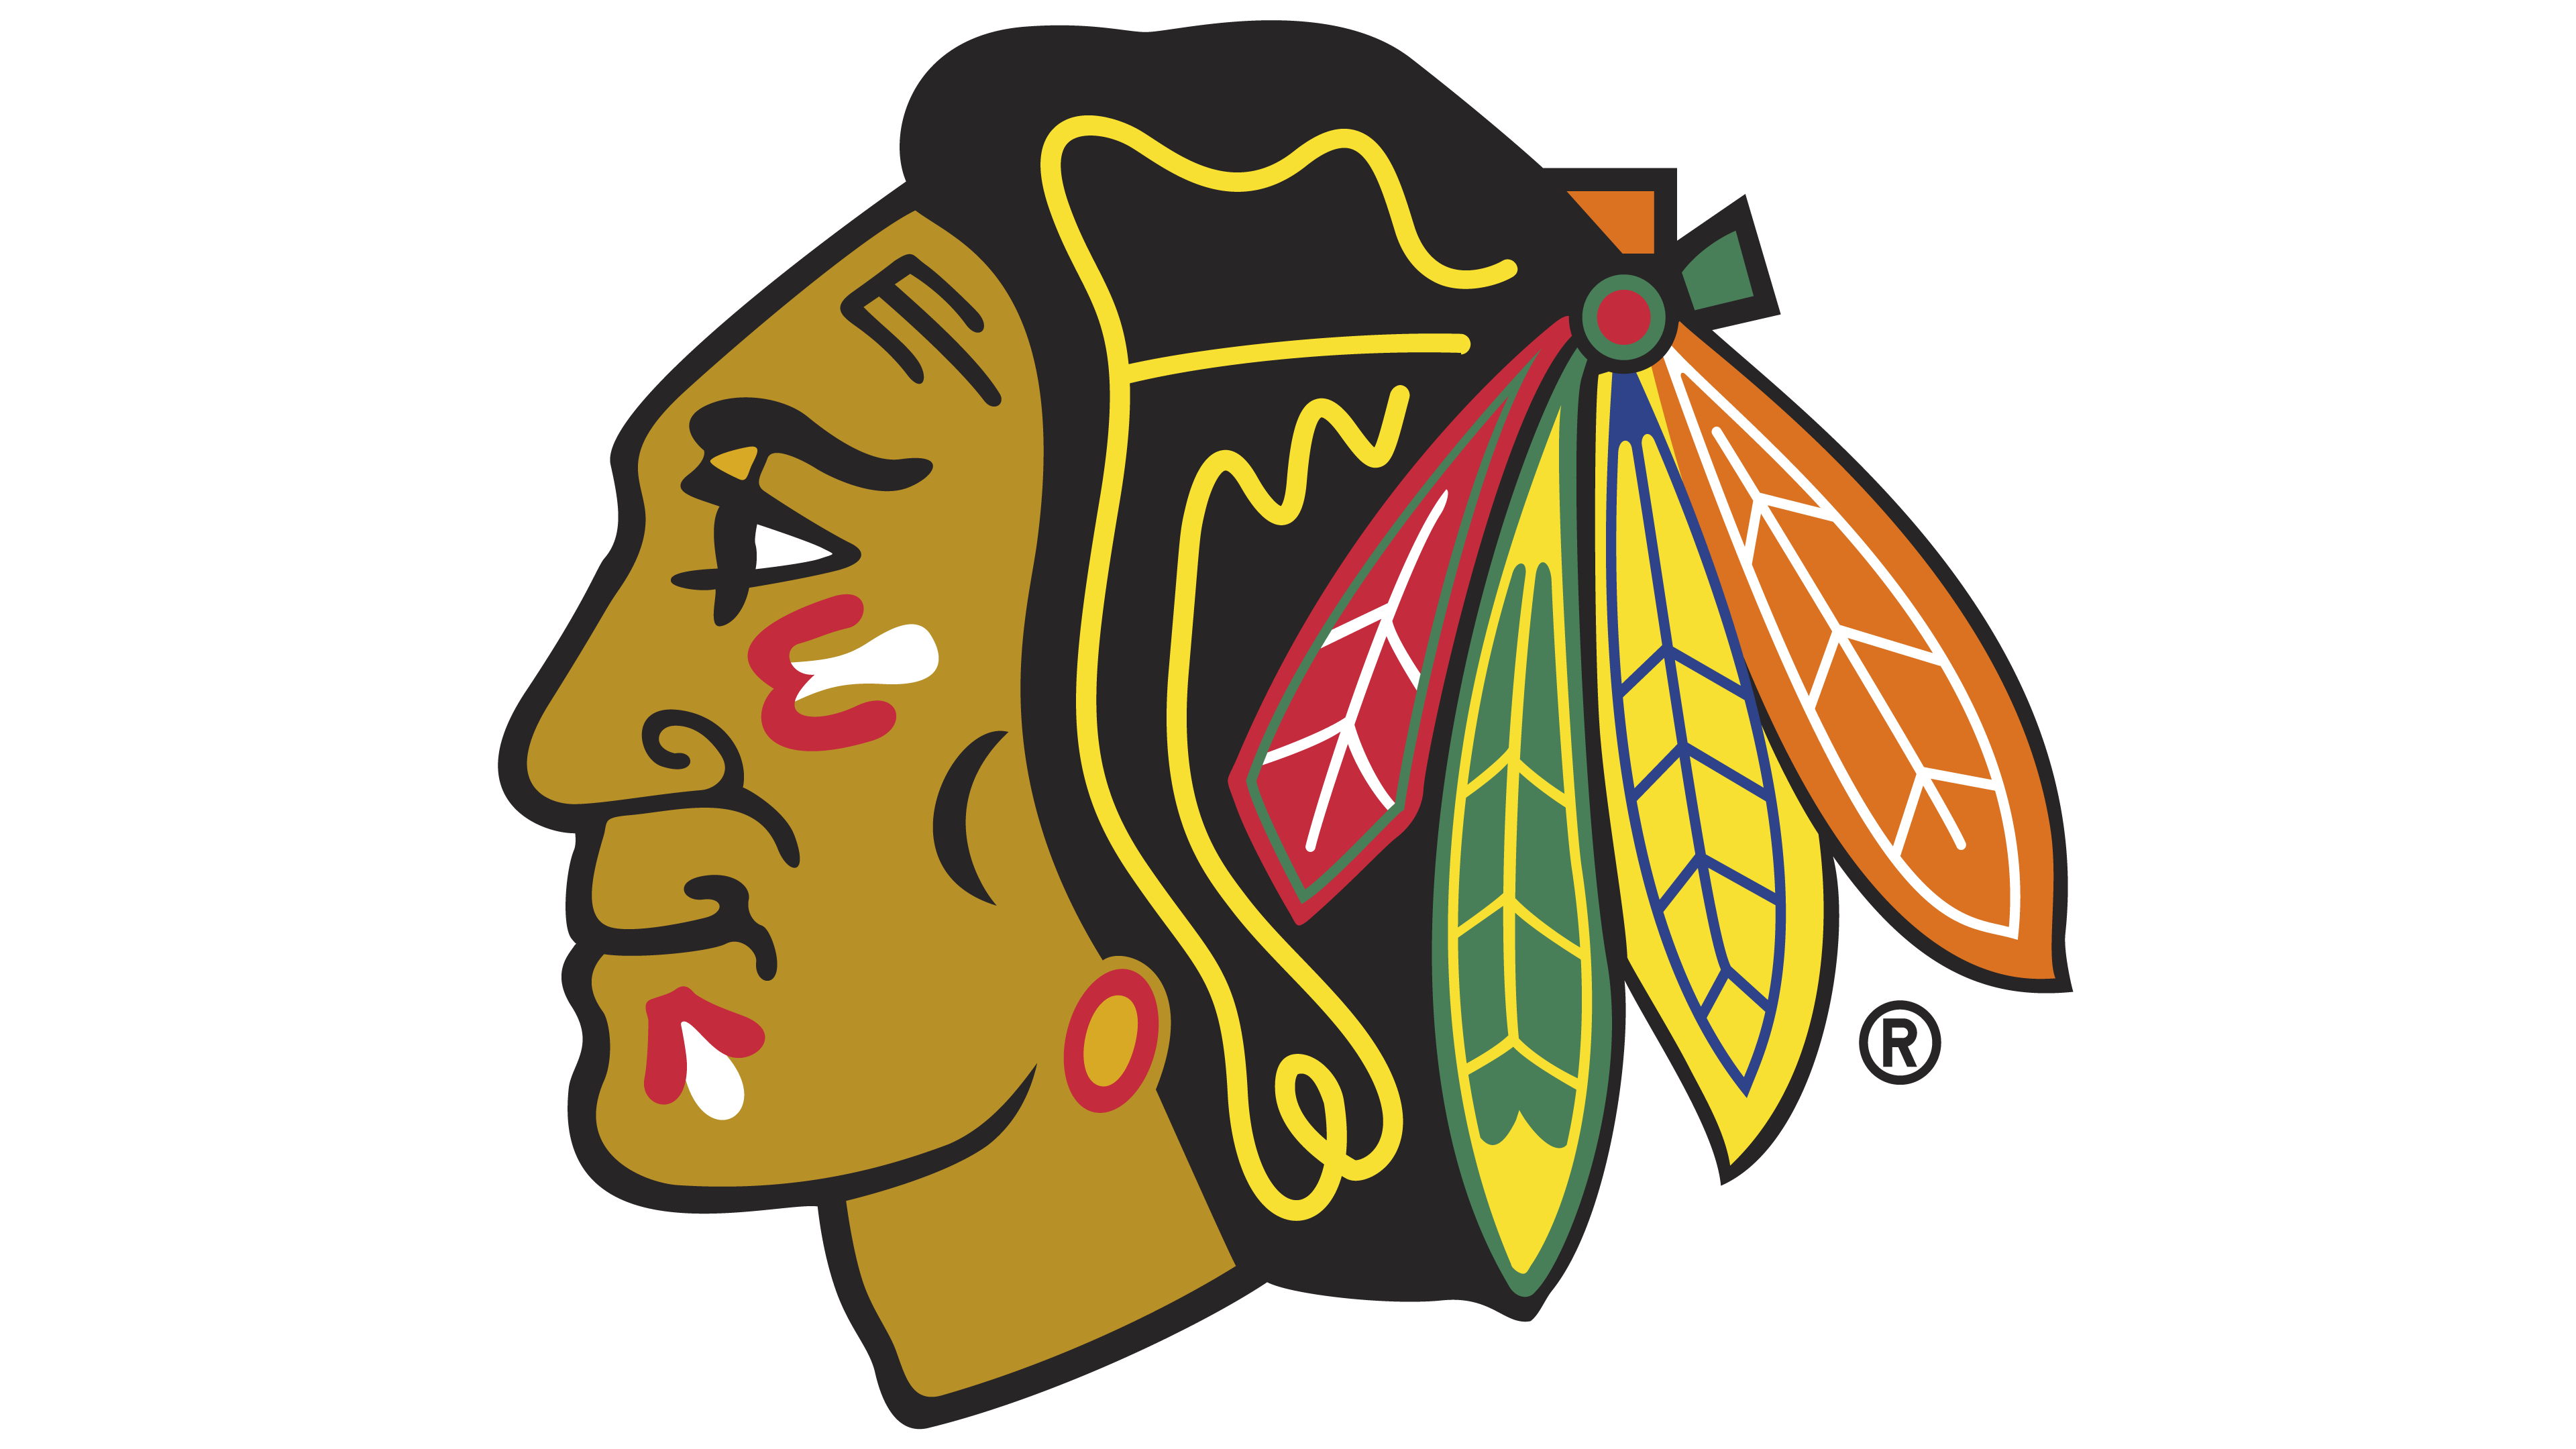 Chicago Blackhawks Logo - Chicago Blackhawks logo - Interesting History Team Name and emblem